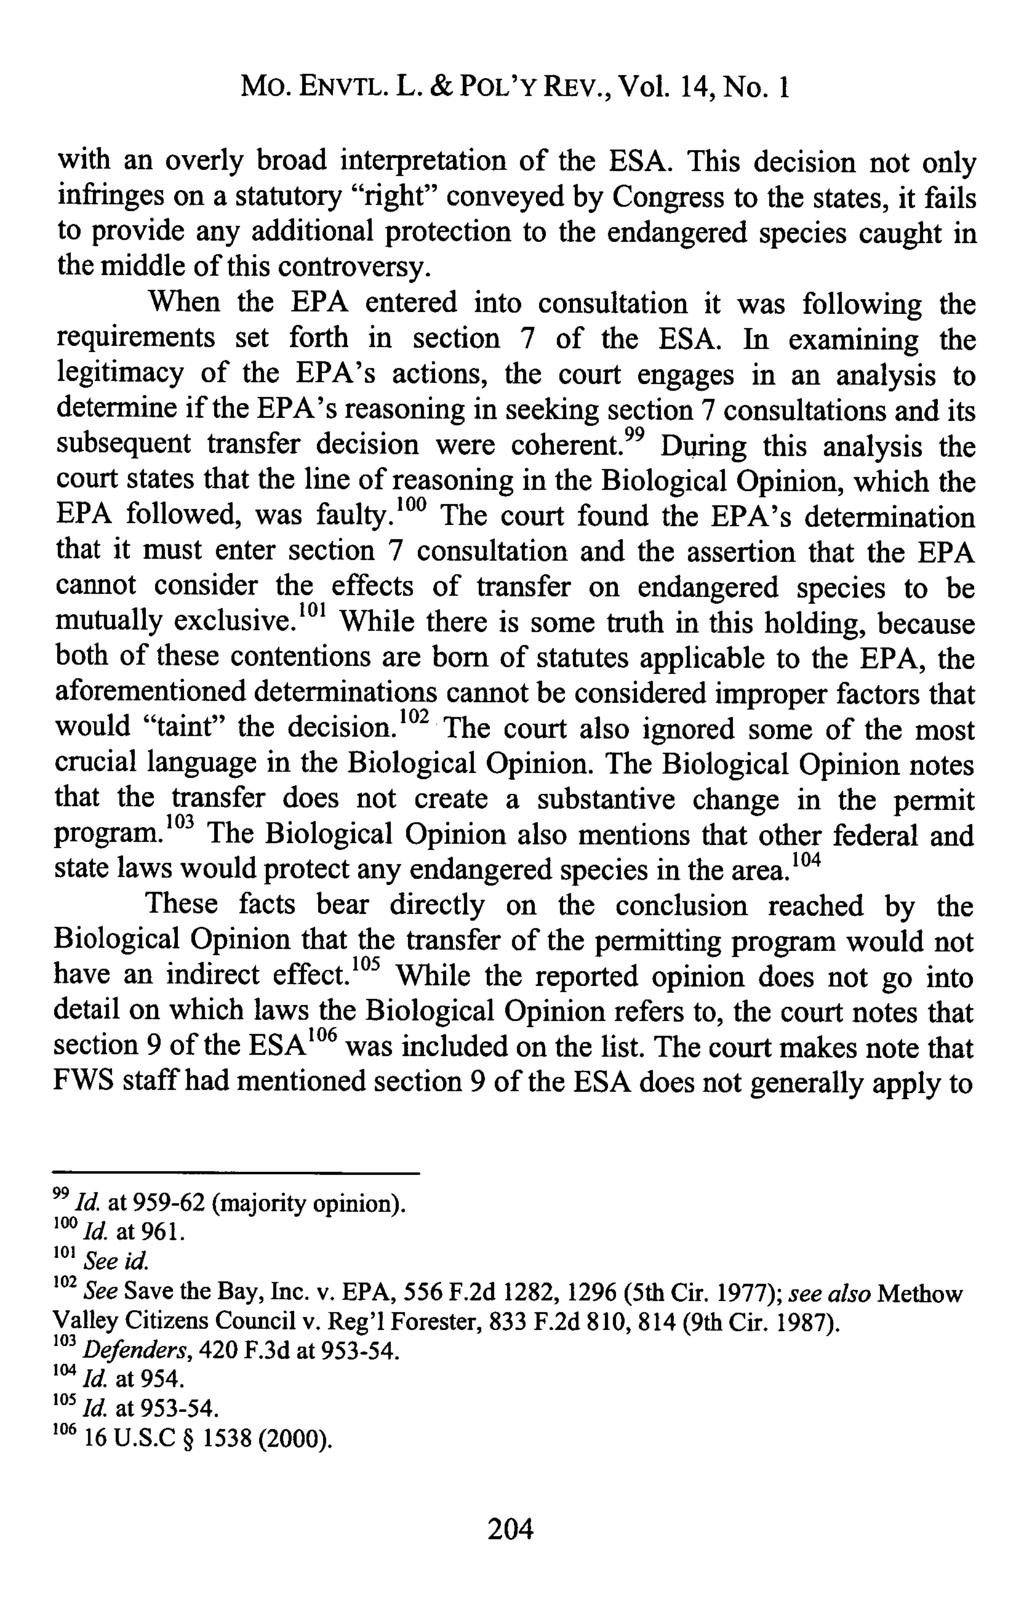 Mo. ENVTL. L. & POL'Y REV., Vol. 14, No. I with an overly broad interpretation of the ESA.